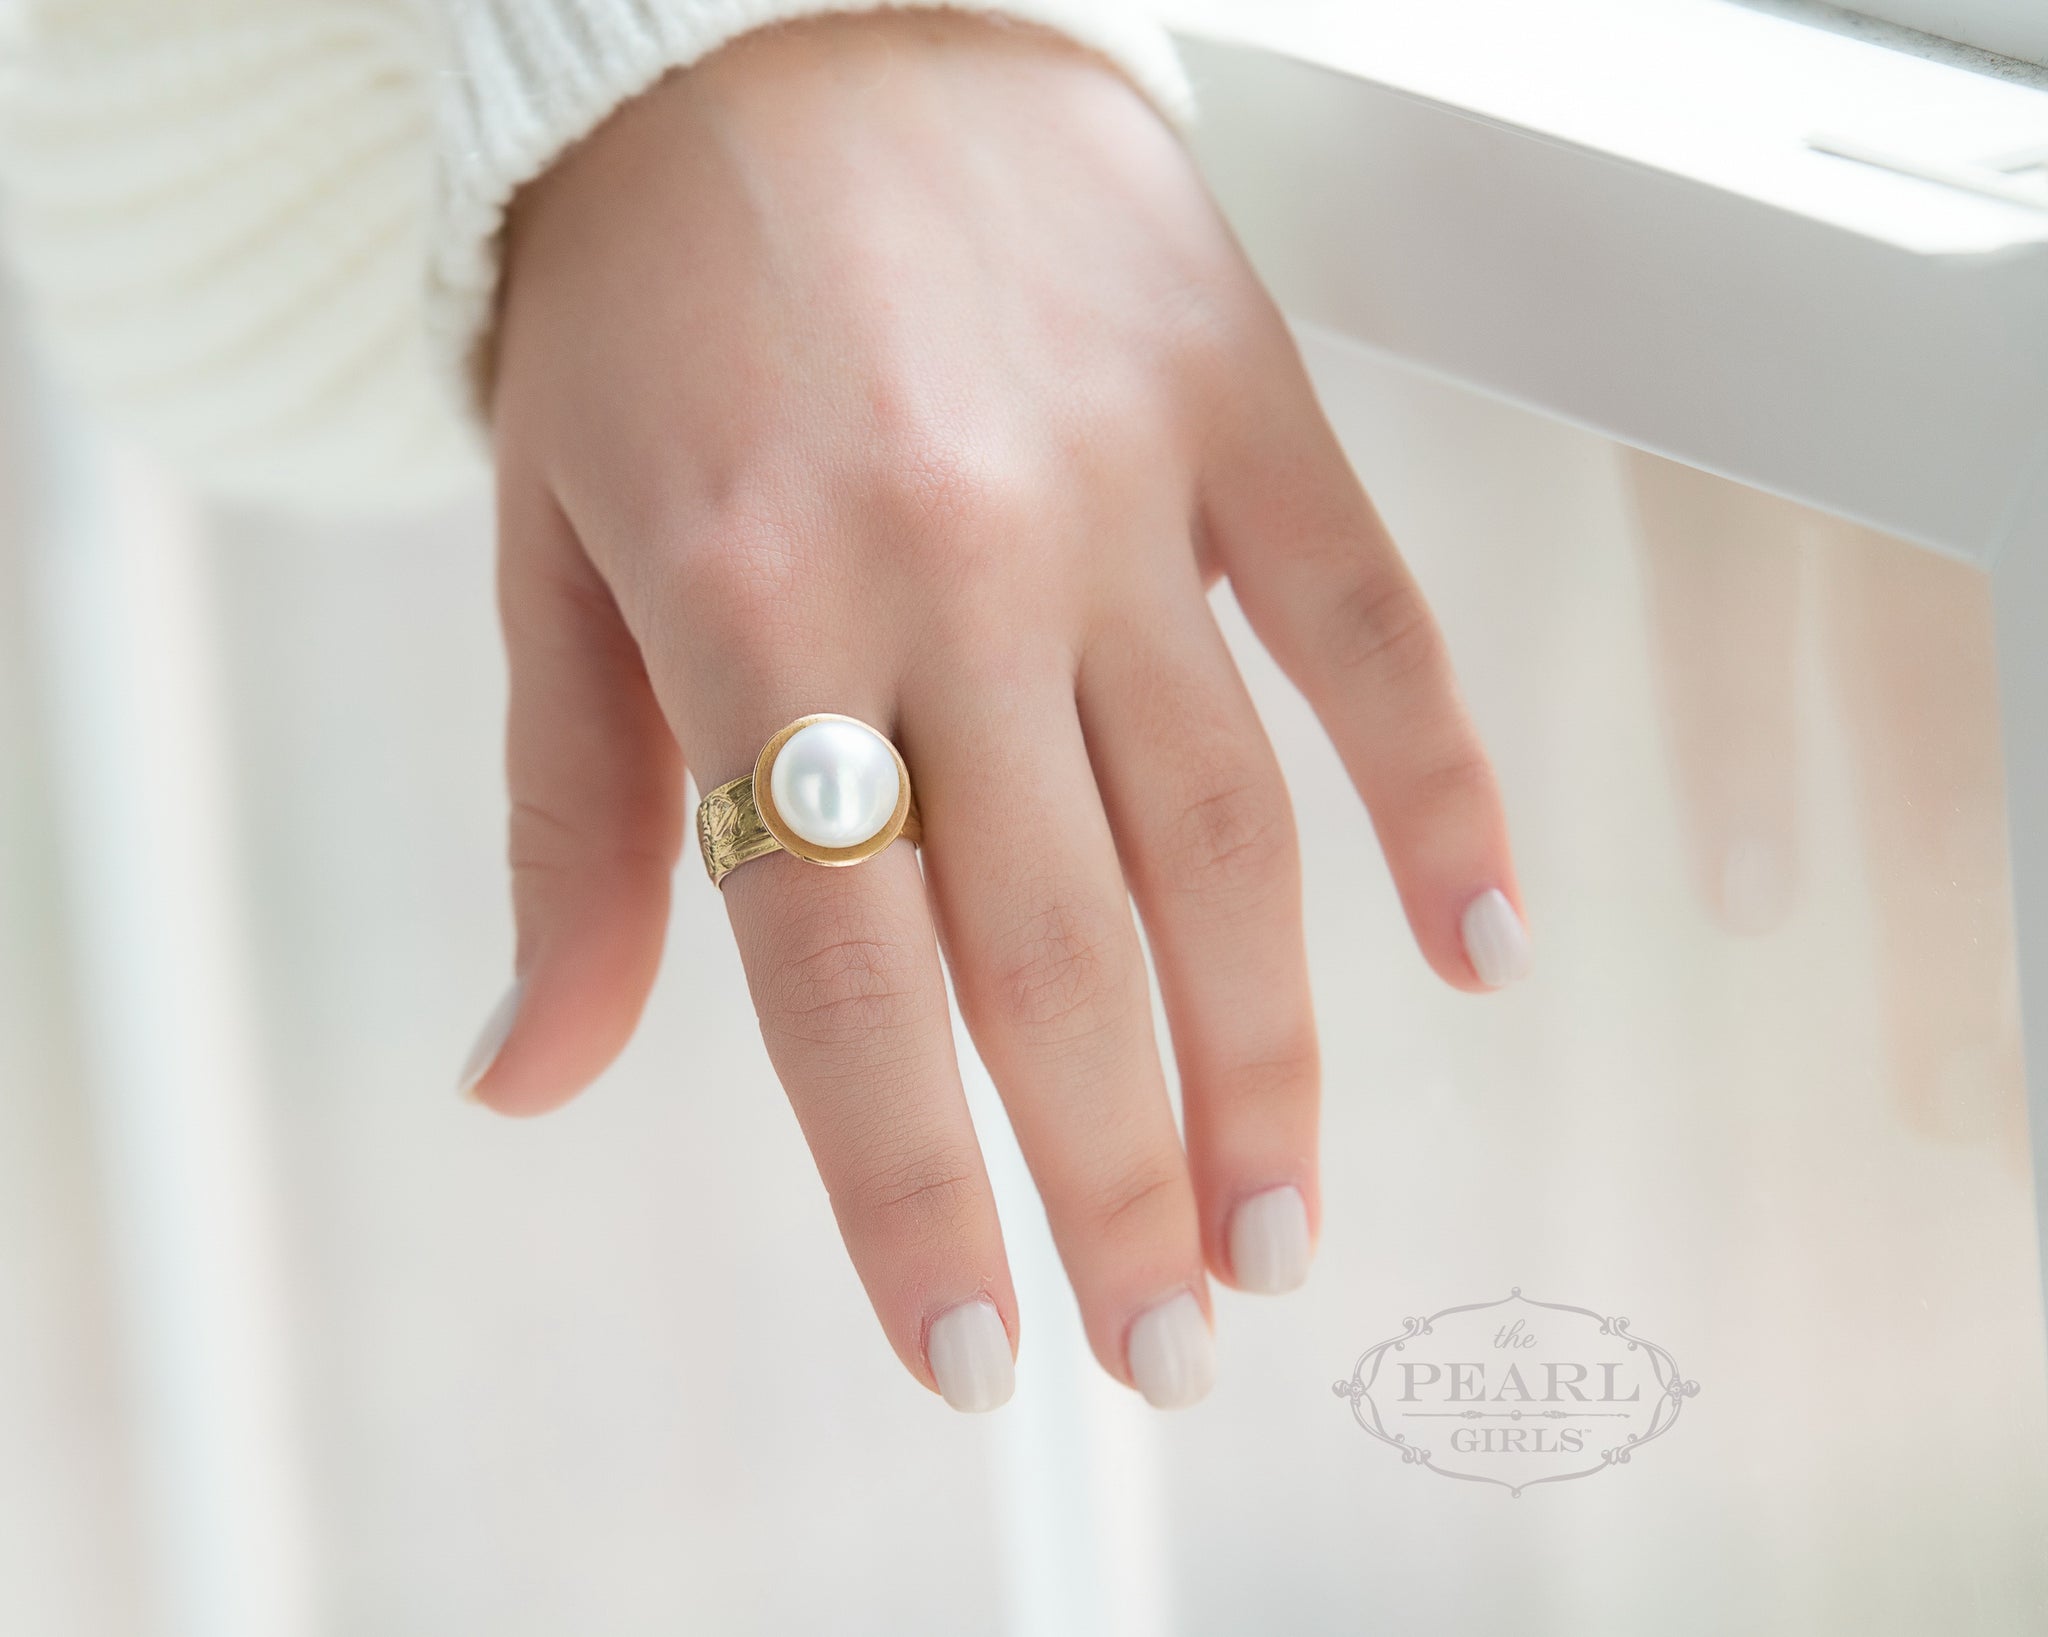 Big Pearl Ring by Sylvia Dawe